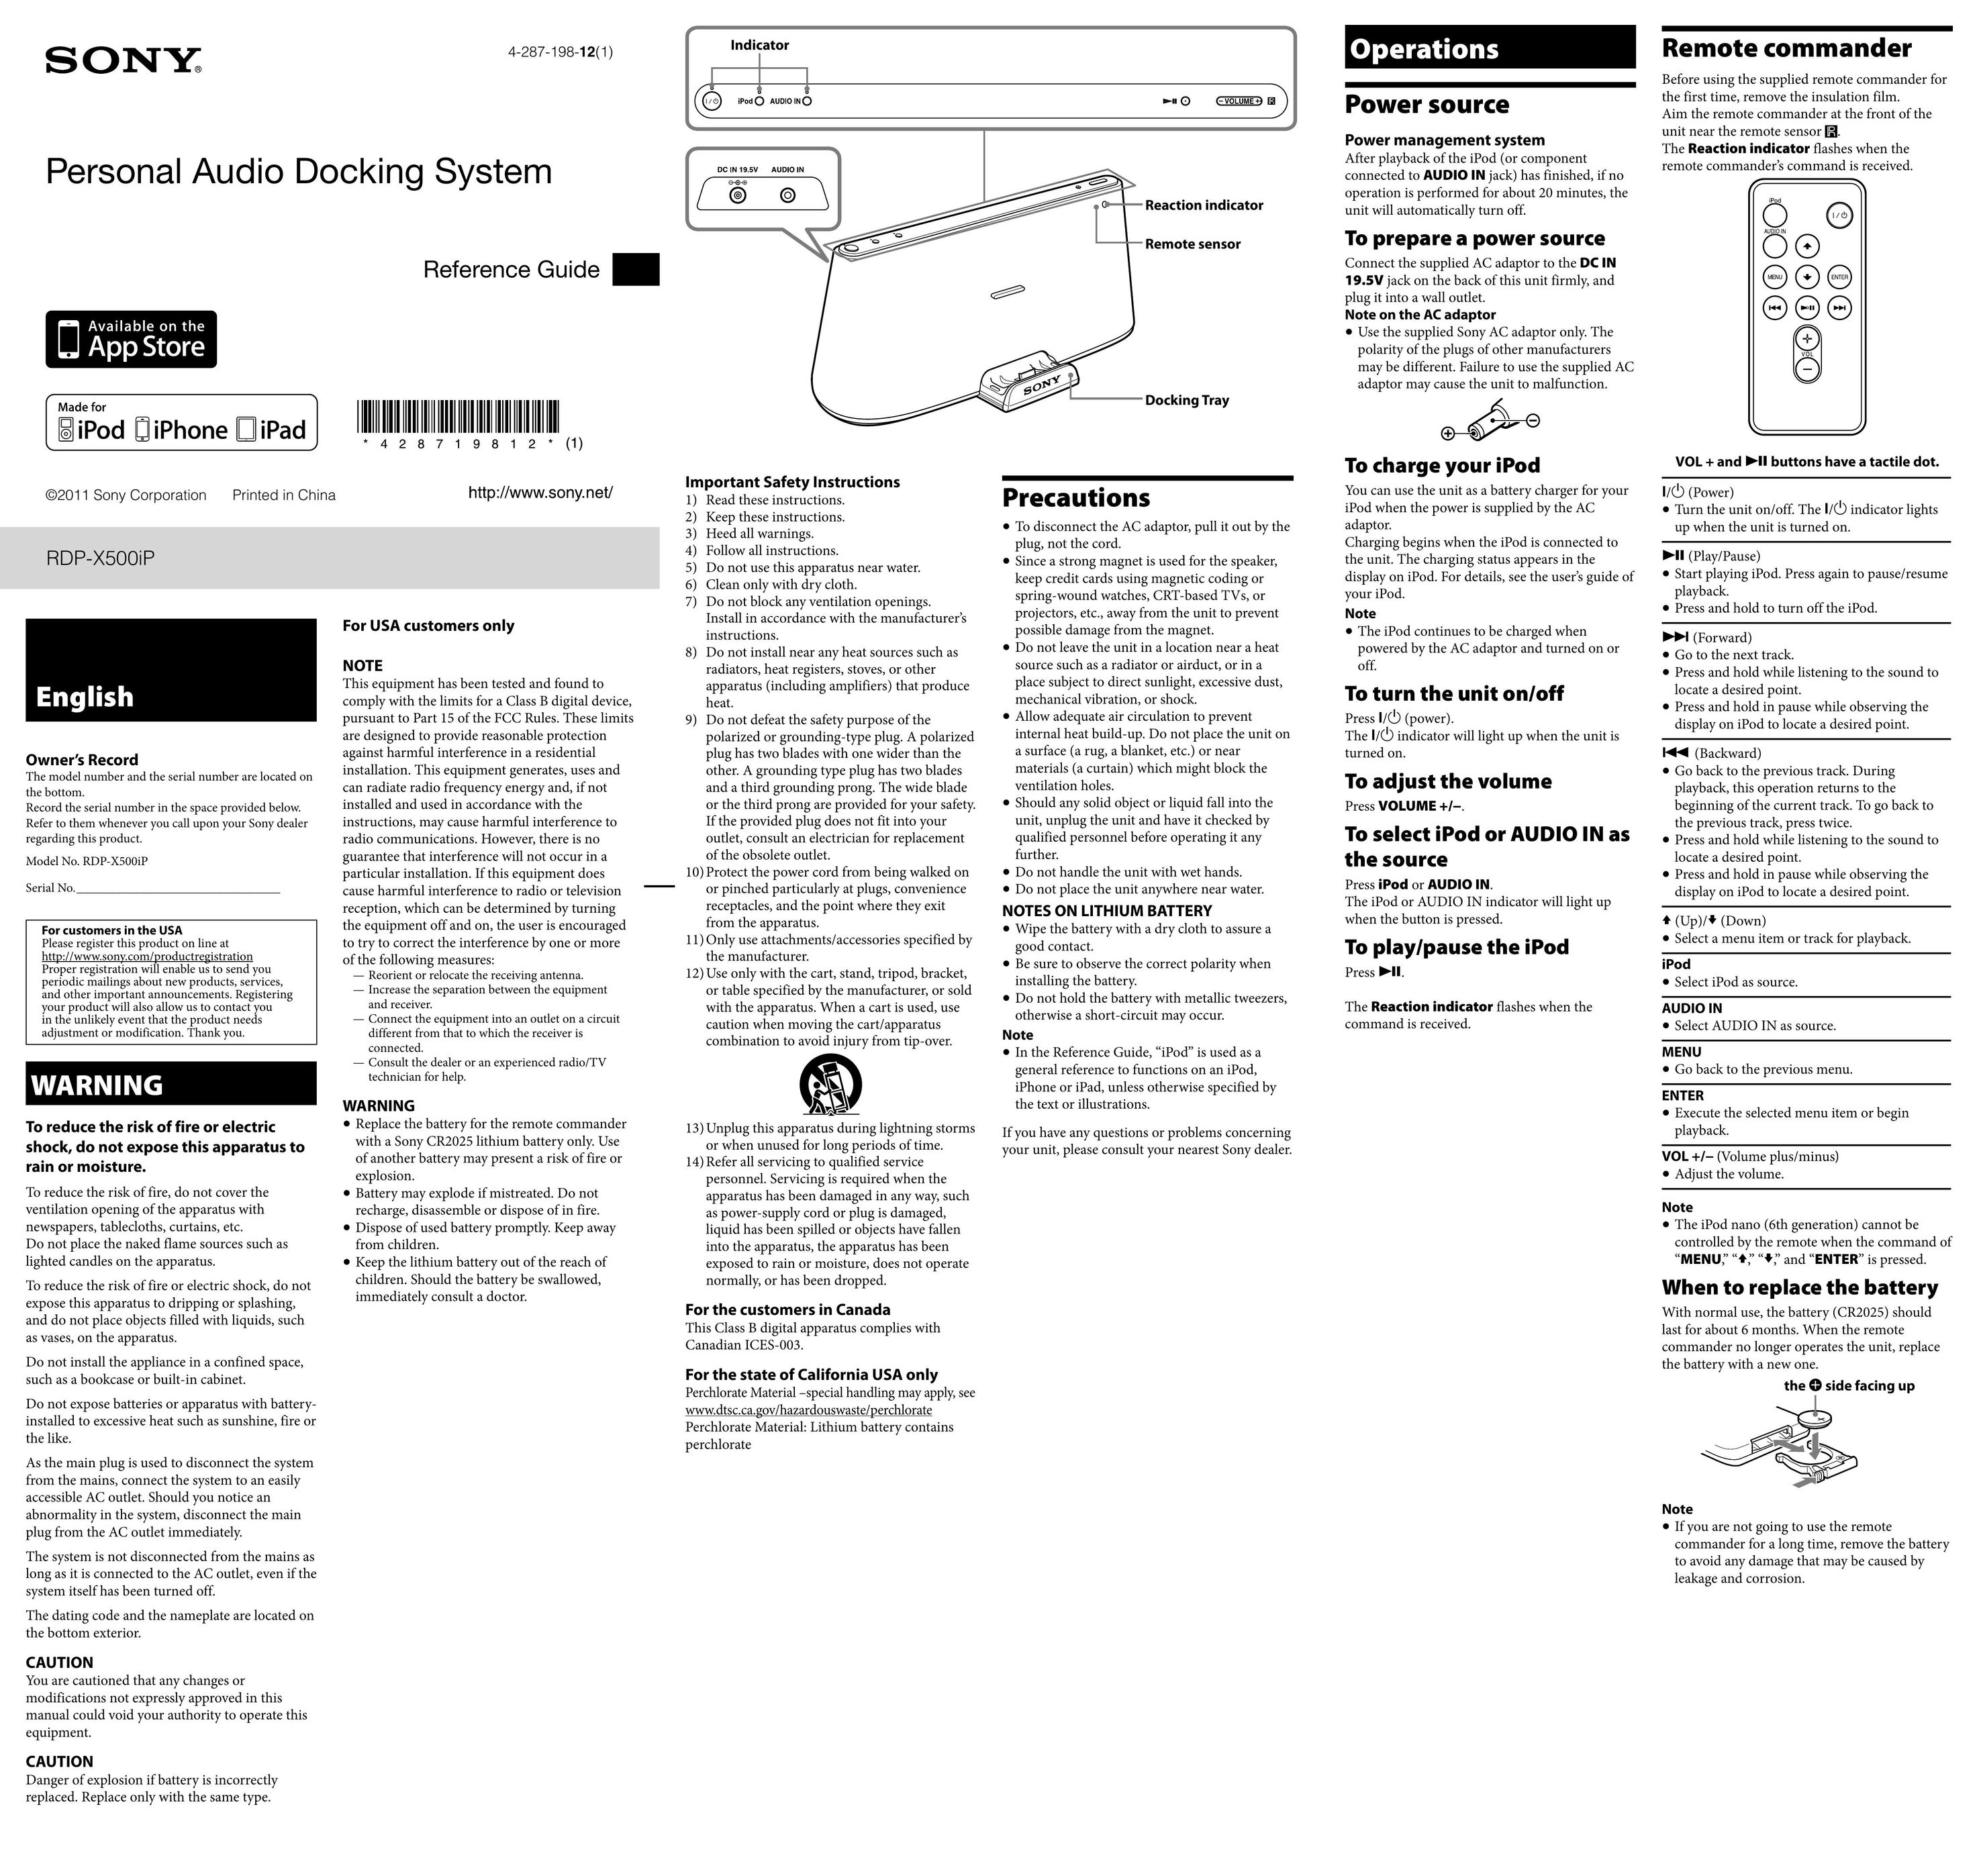 Sony RDP-X500IP Speaker User Manual